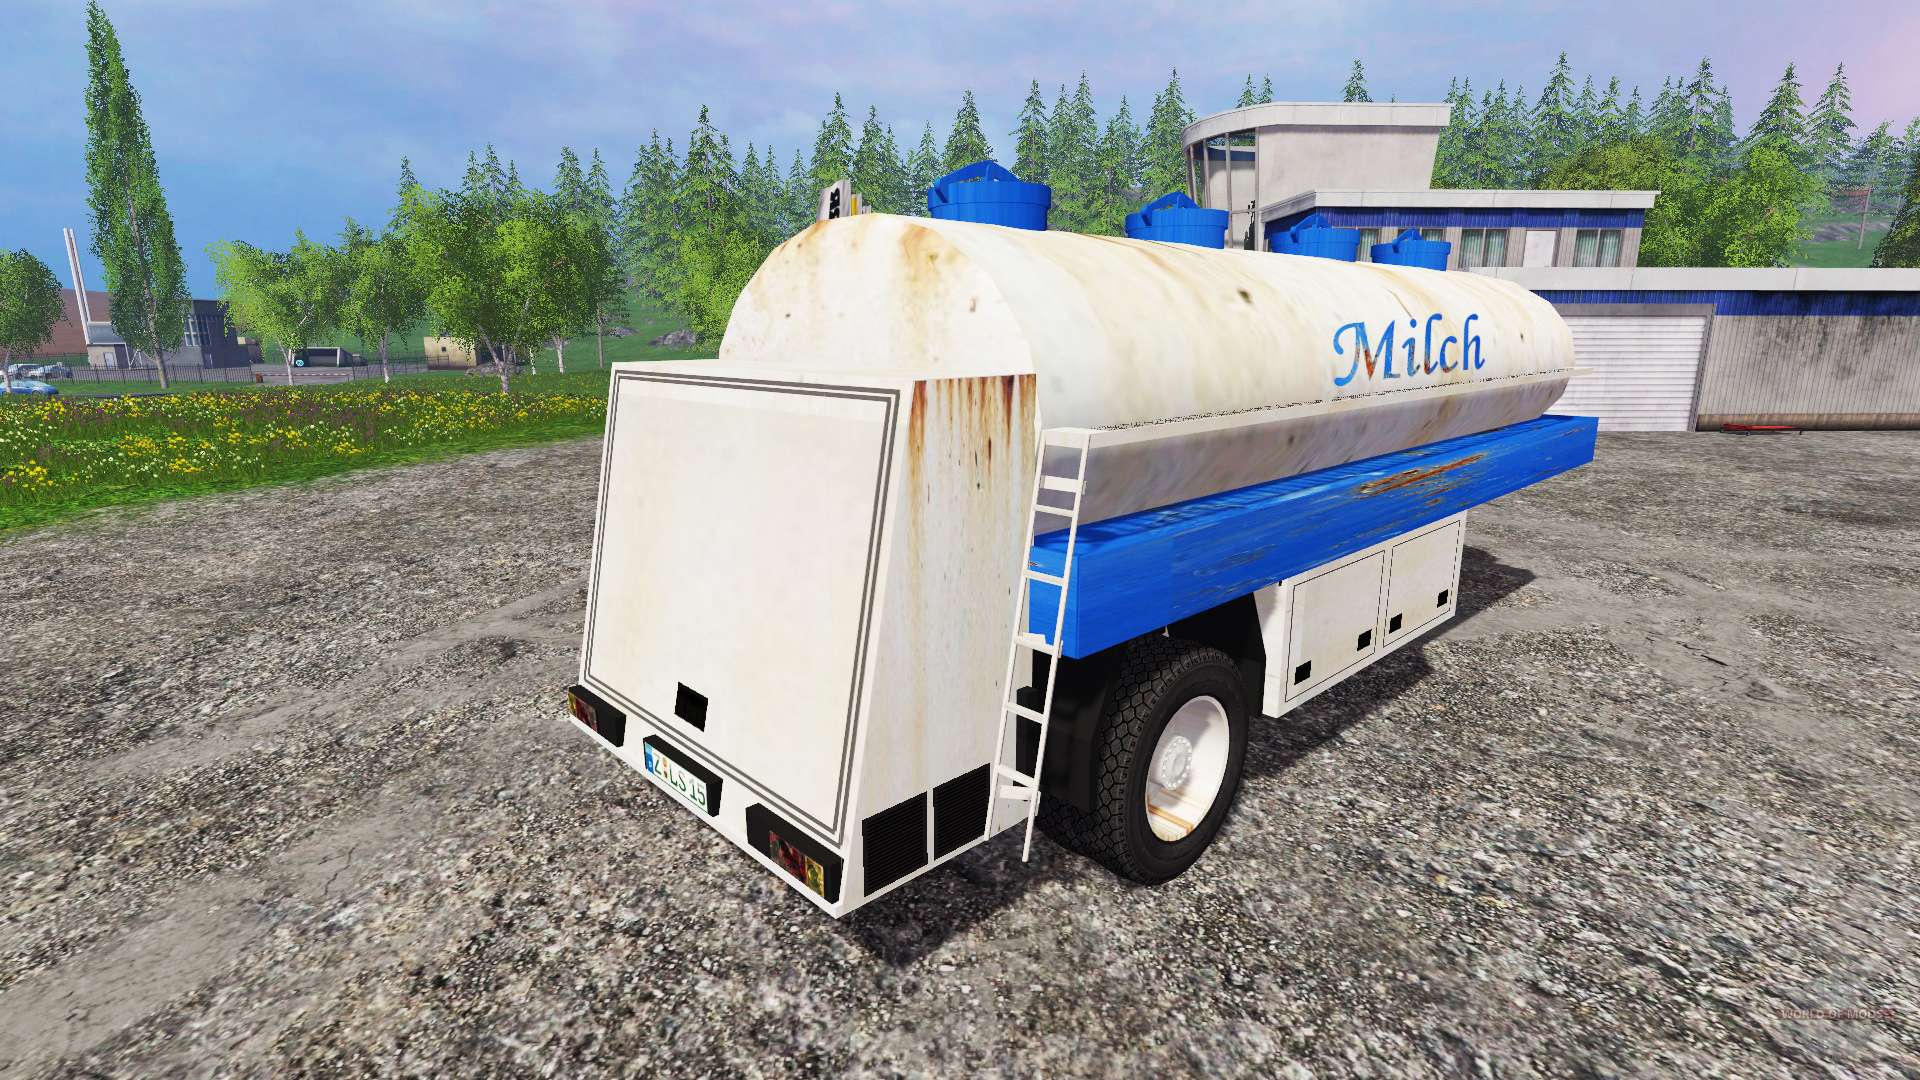 how do you transport milk in farming simulator 14 how to transport crops in farming simulator 15